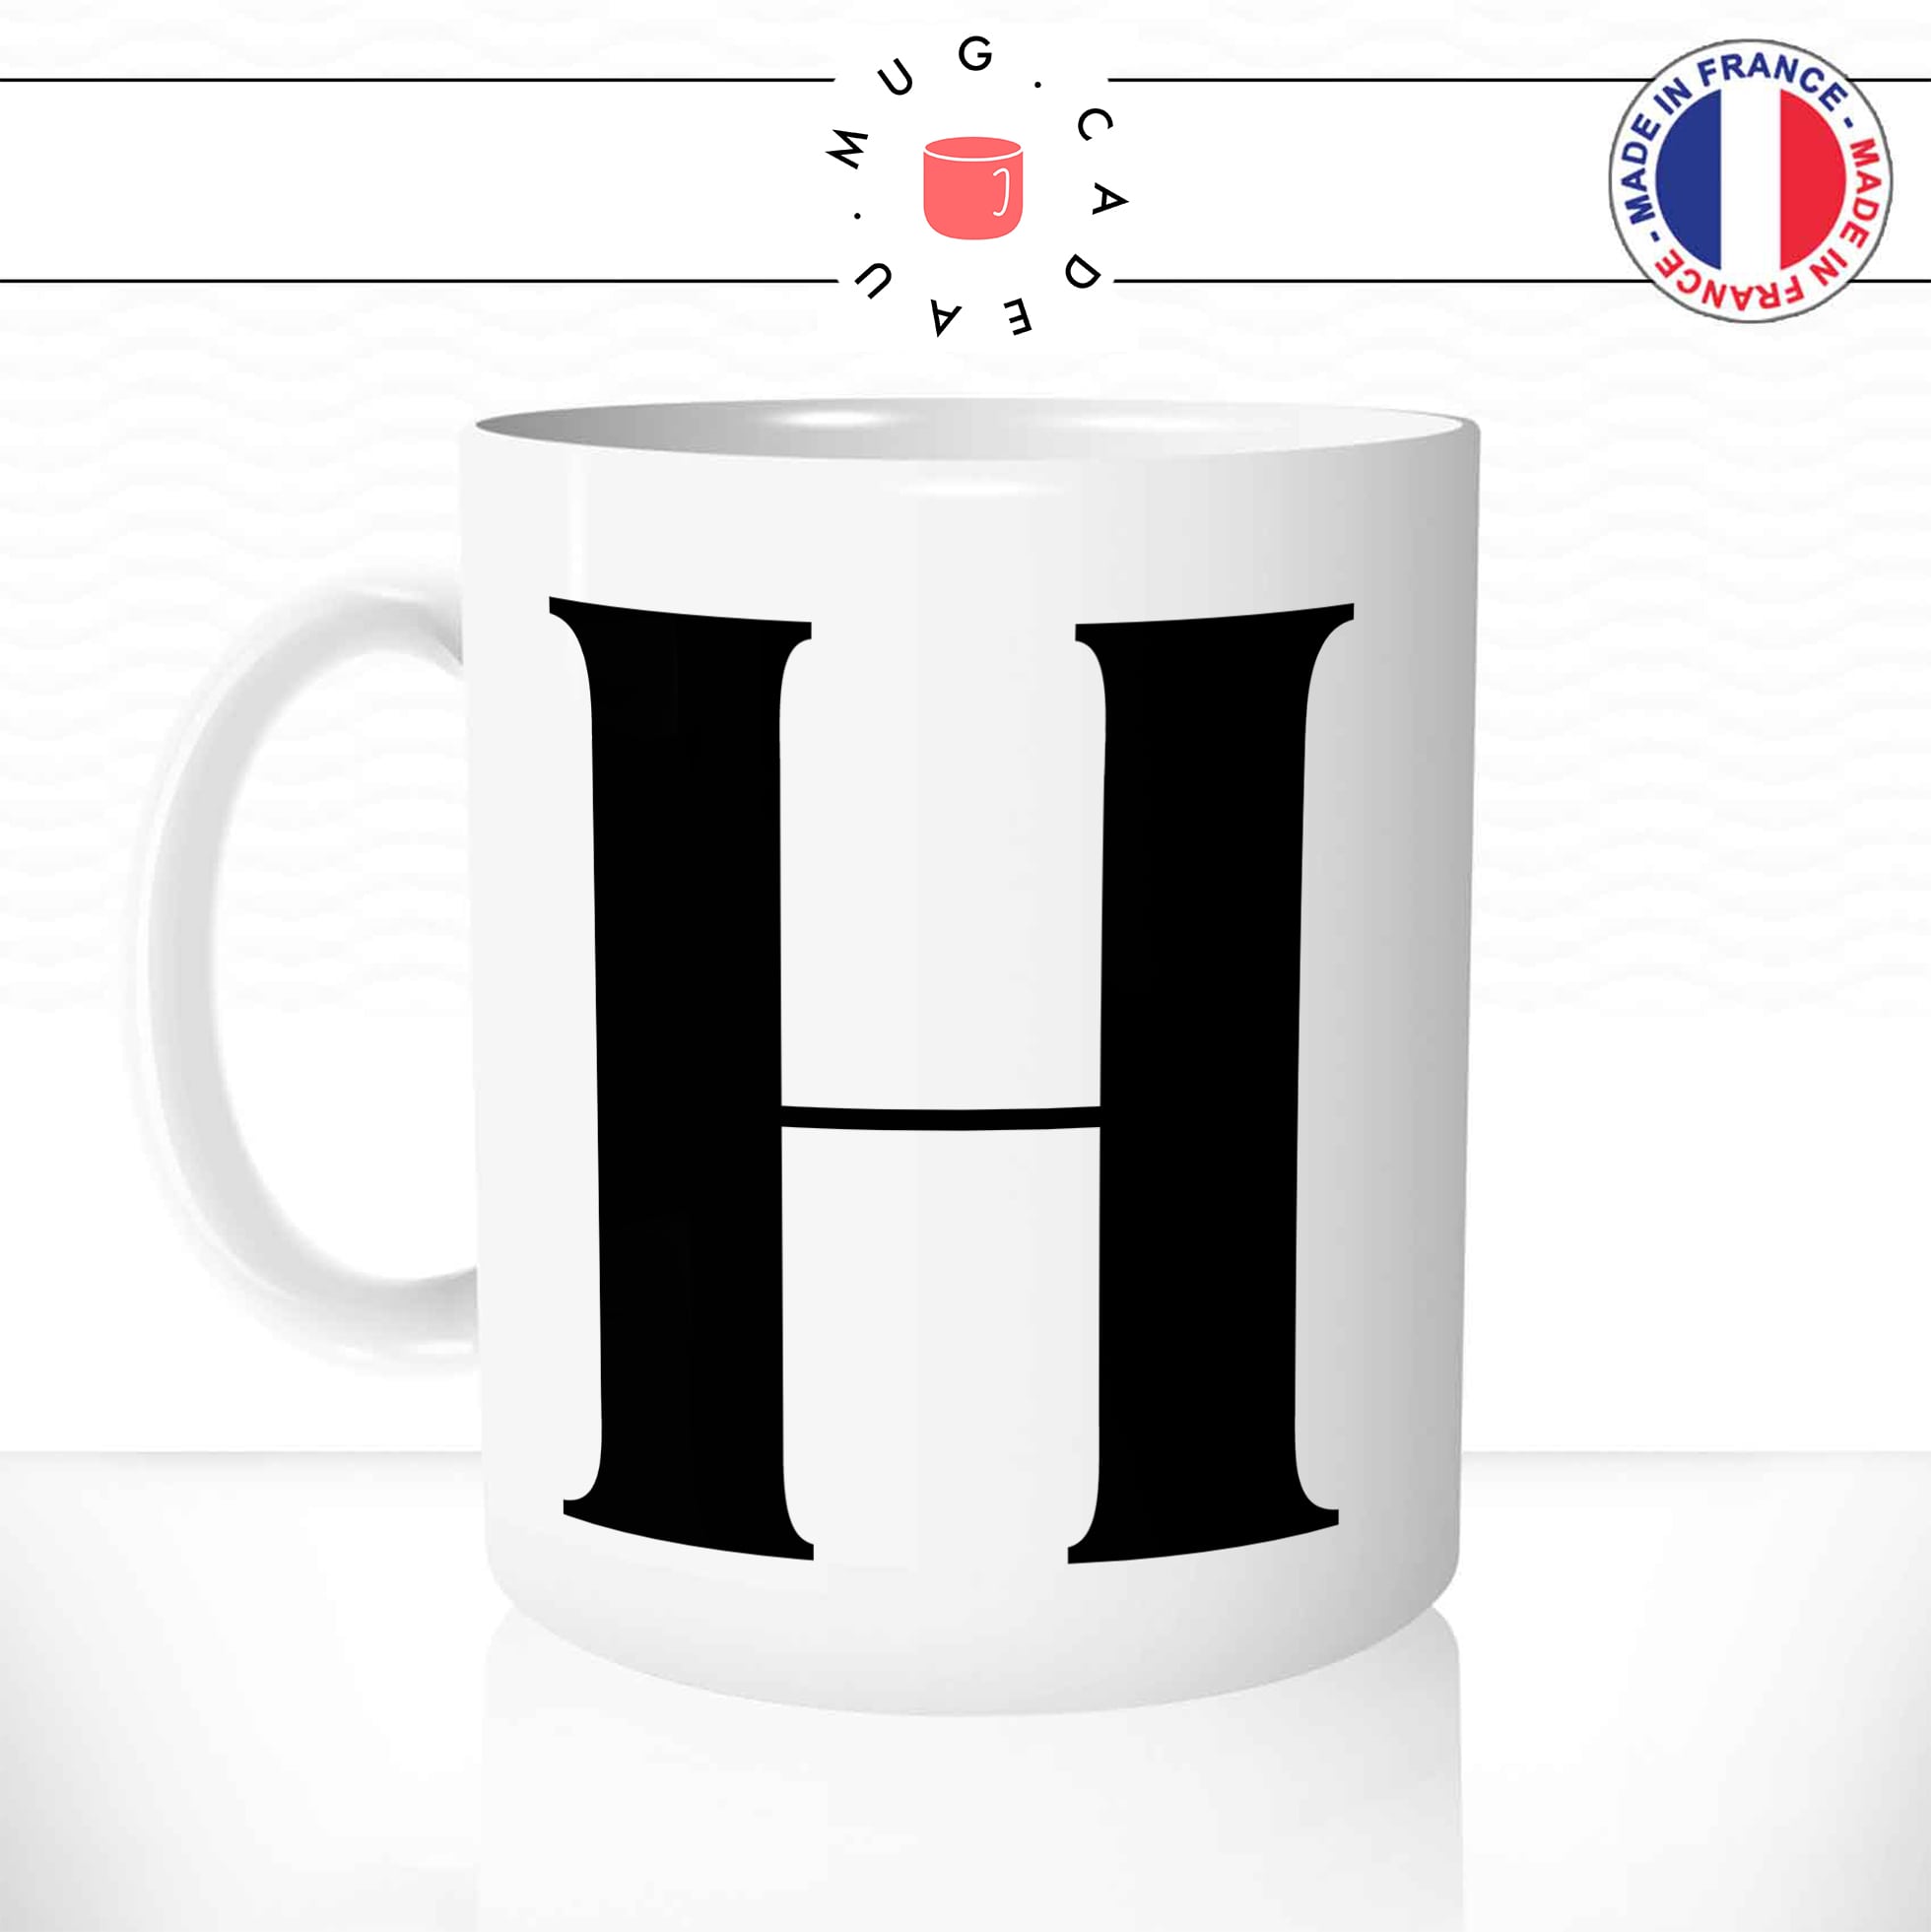 mug-tasse-H-initiale-alphabet-prenom-nom-calligraphie-majuscule-minuscule-original-café-thé-idée-cadeau-personnalisable-fun